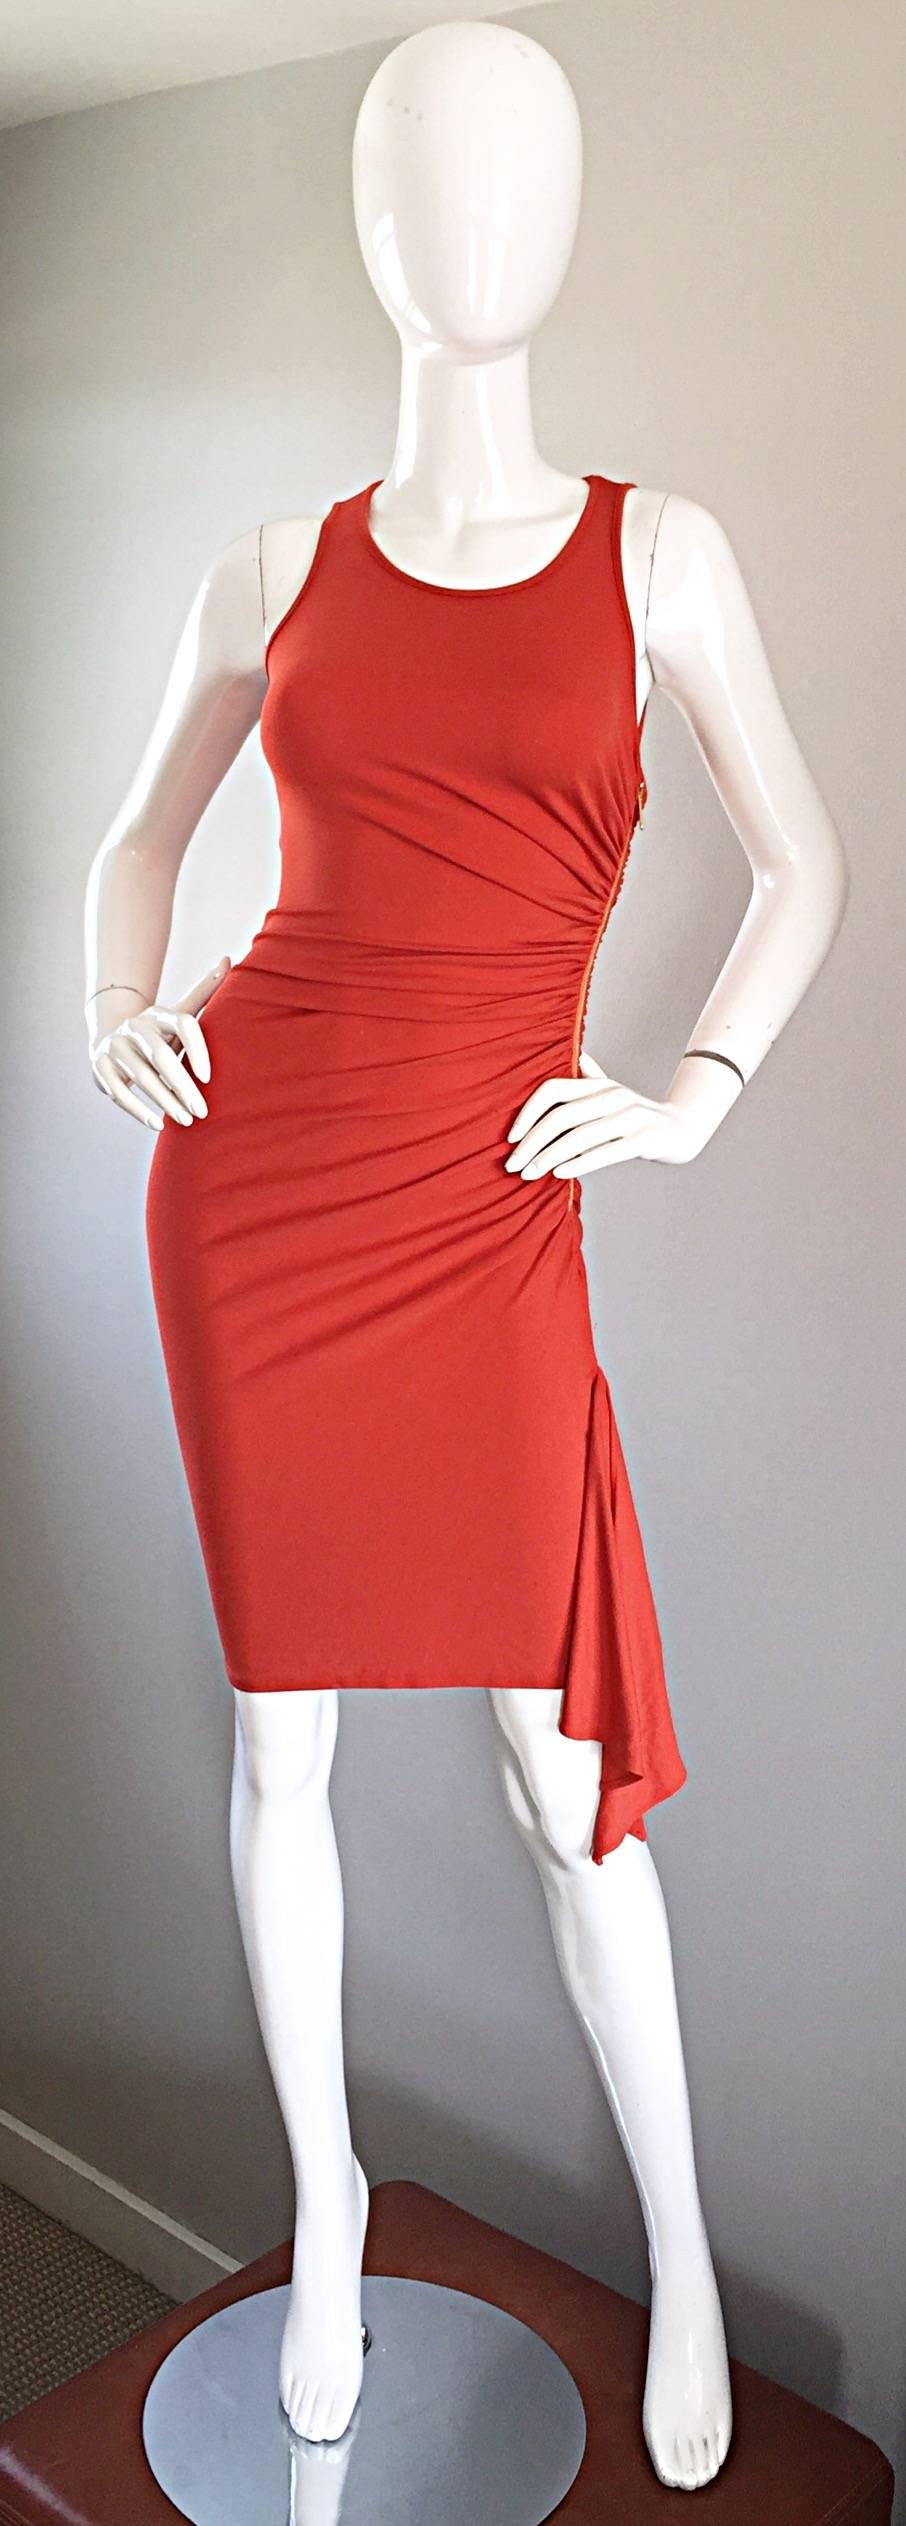 Michael Kors Collection Burnt Orange Runway Grecian Bodycon Jersey Dress Size 2 3